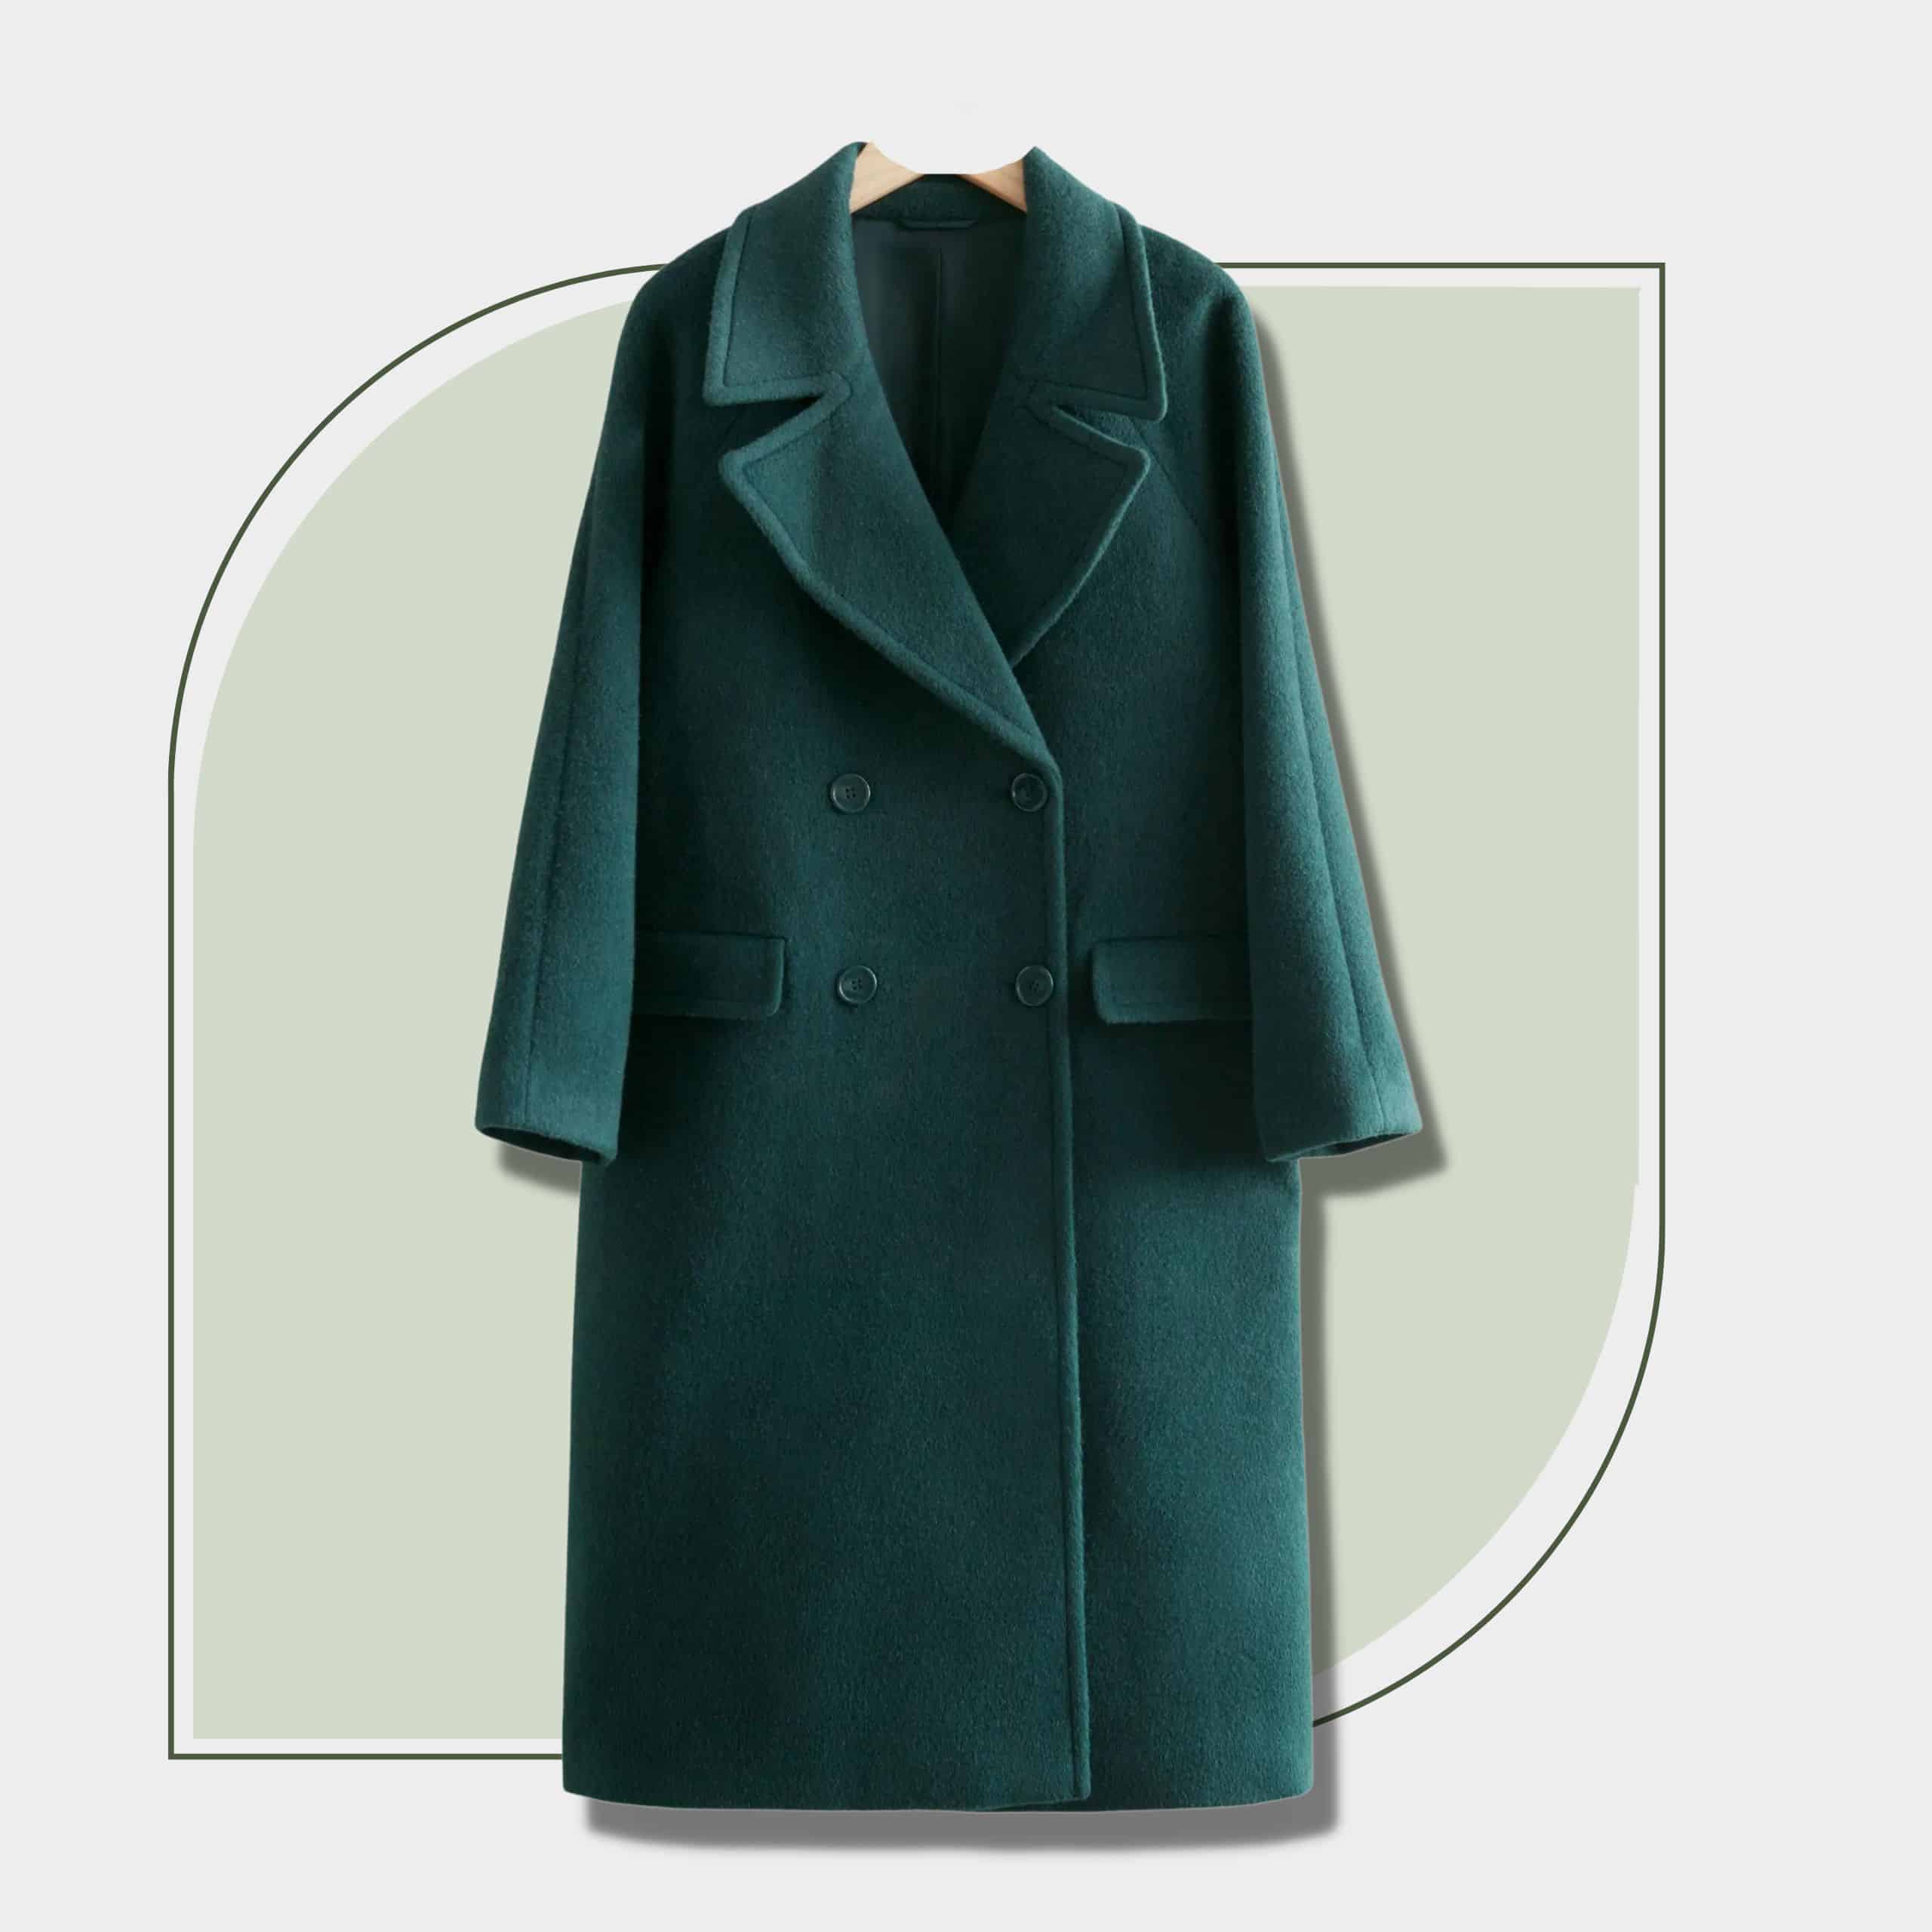 Effortless Chic Winter Capsule Wardrobe-Colored Coat